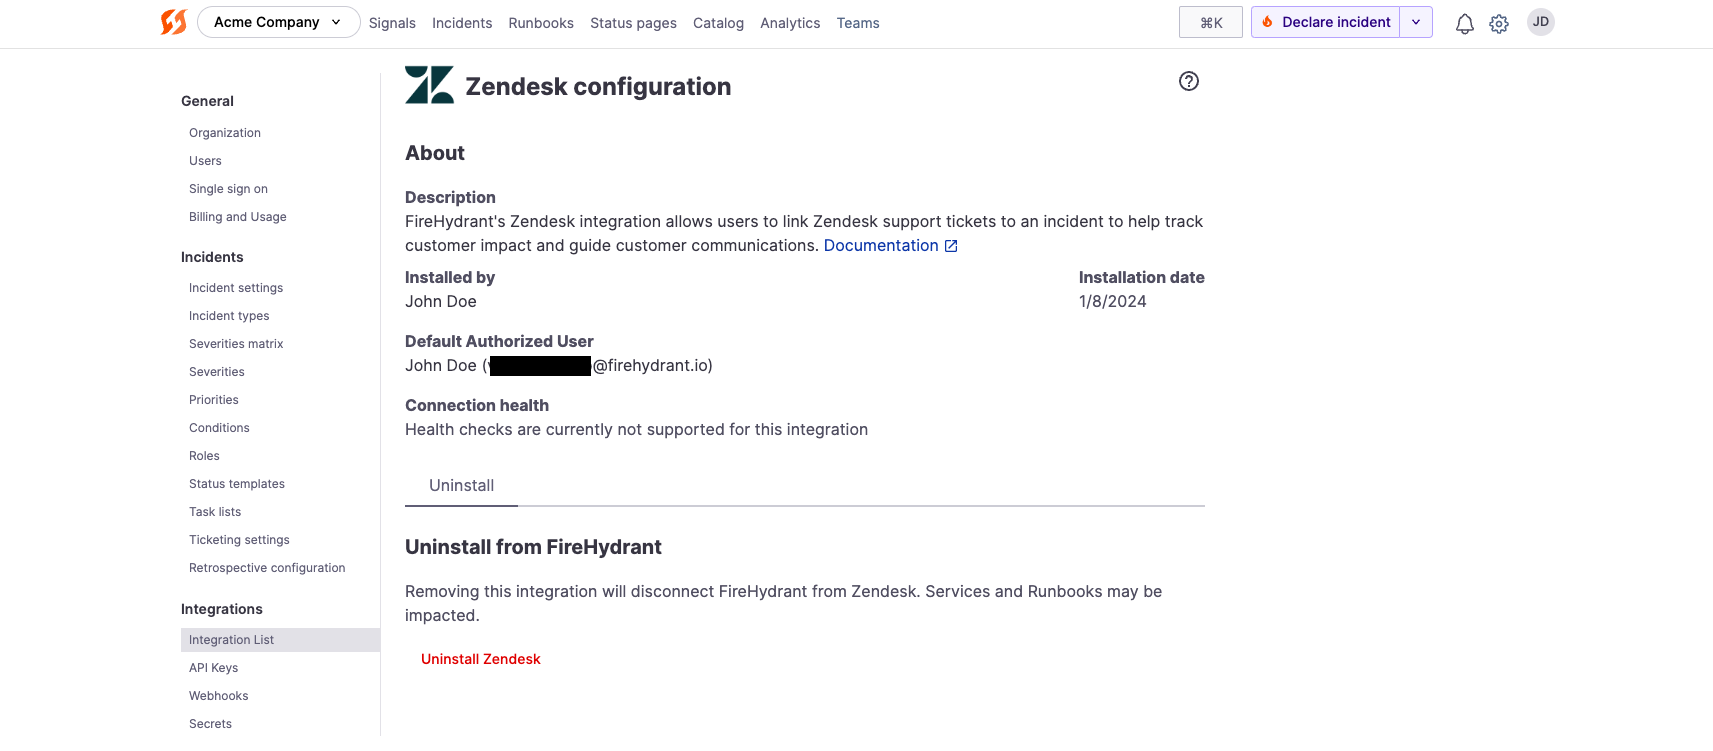 Successful Zendesk integration